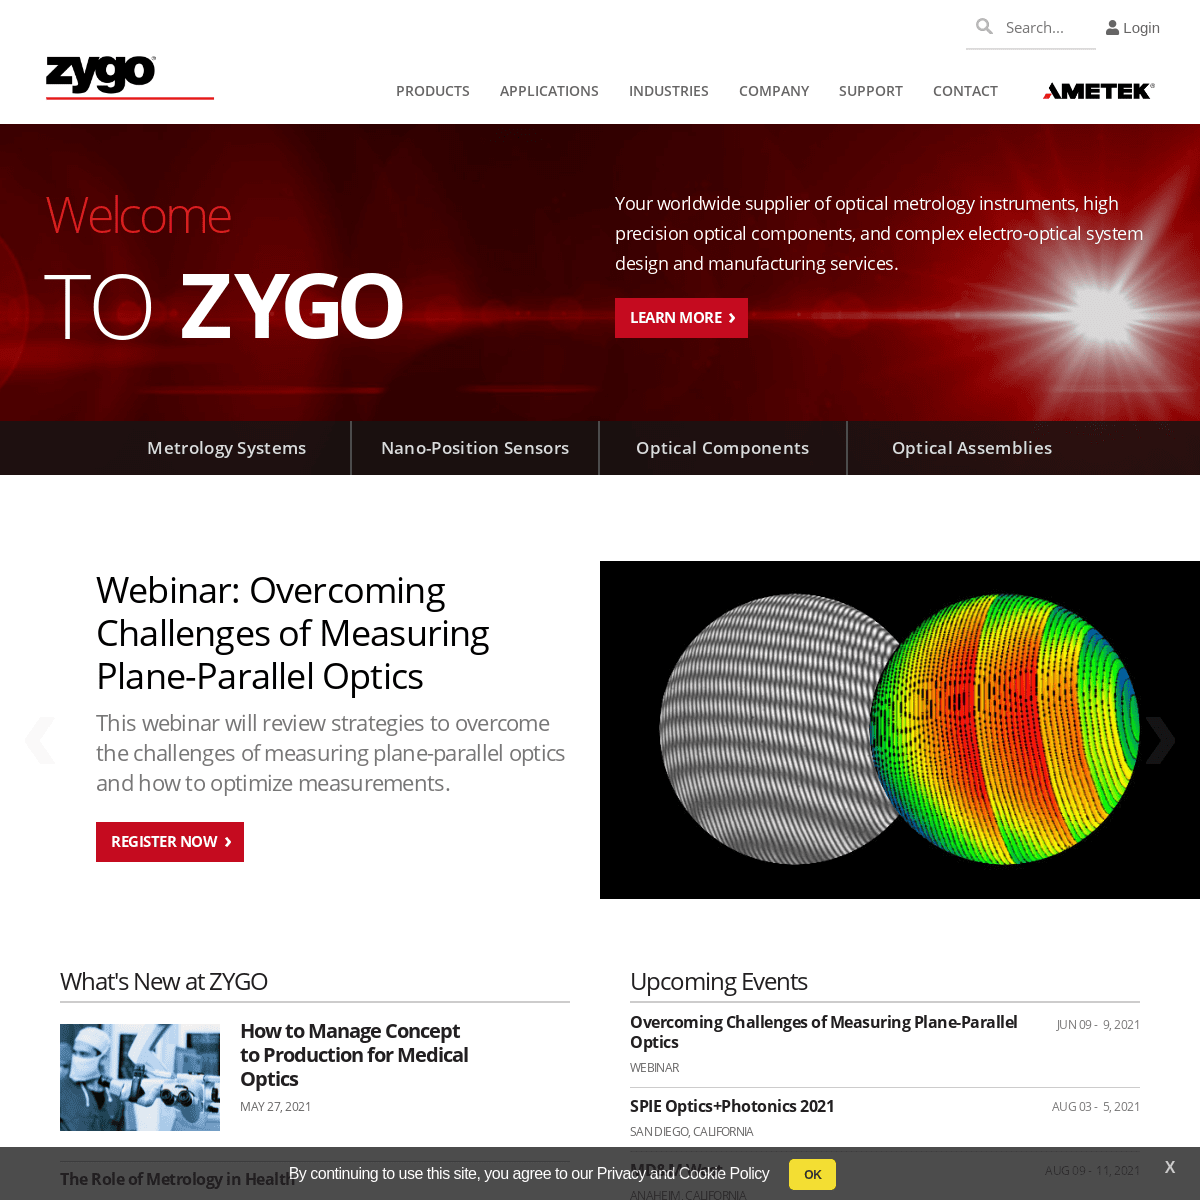 A complete backup of https://zygo.com